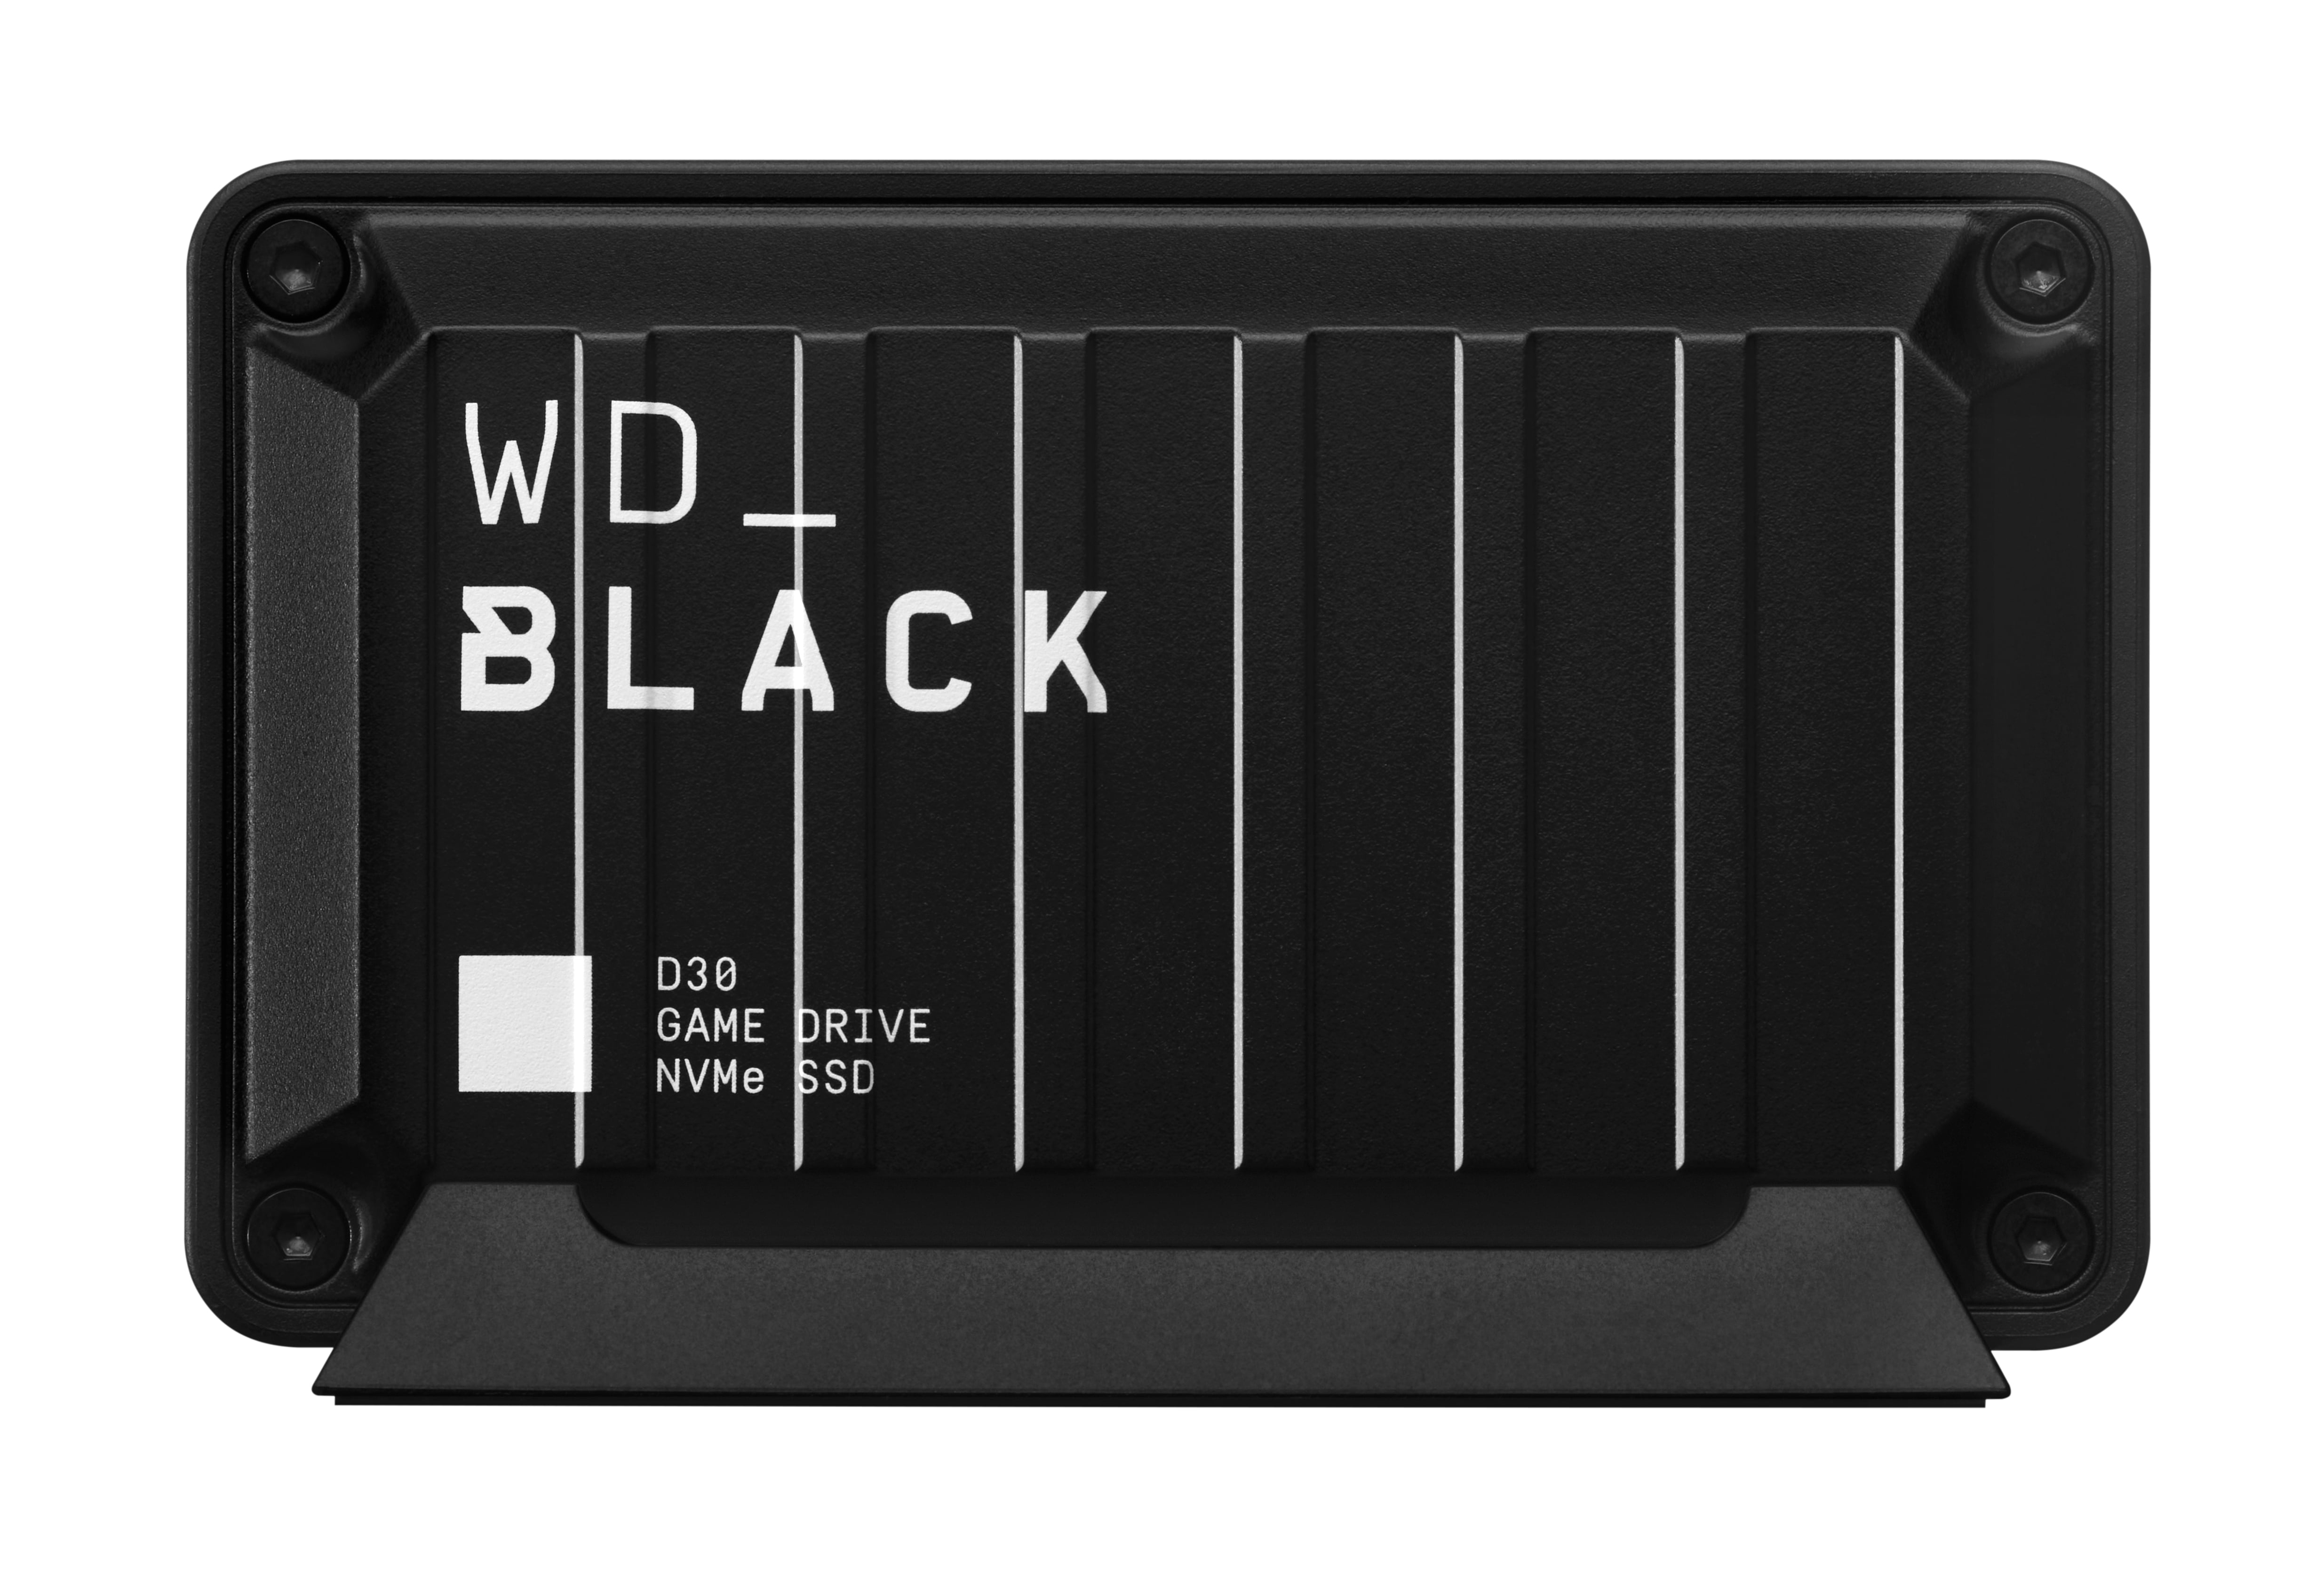 WD_BLACK 1TB D30 Game Drive SSD - WDBATL0010BBK-WESE